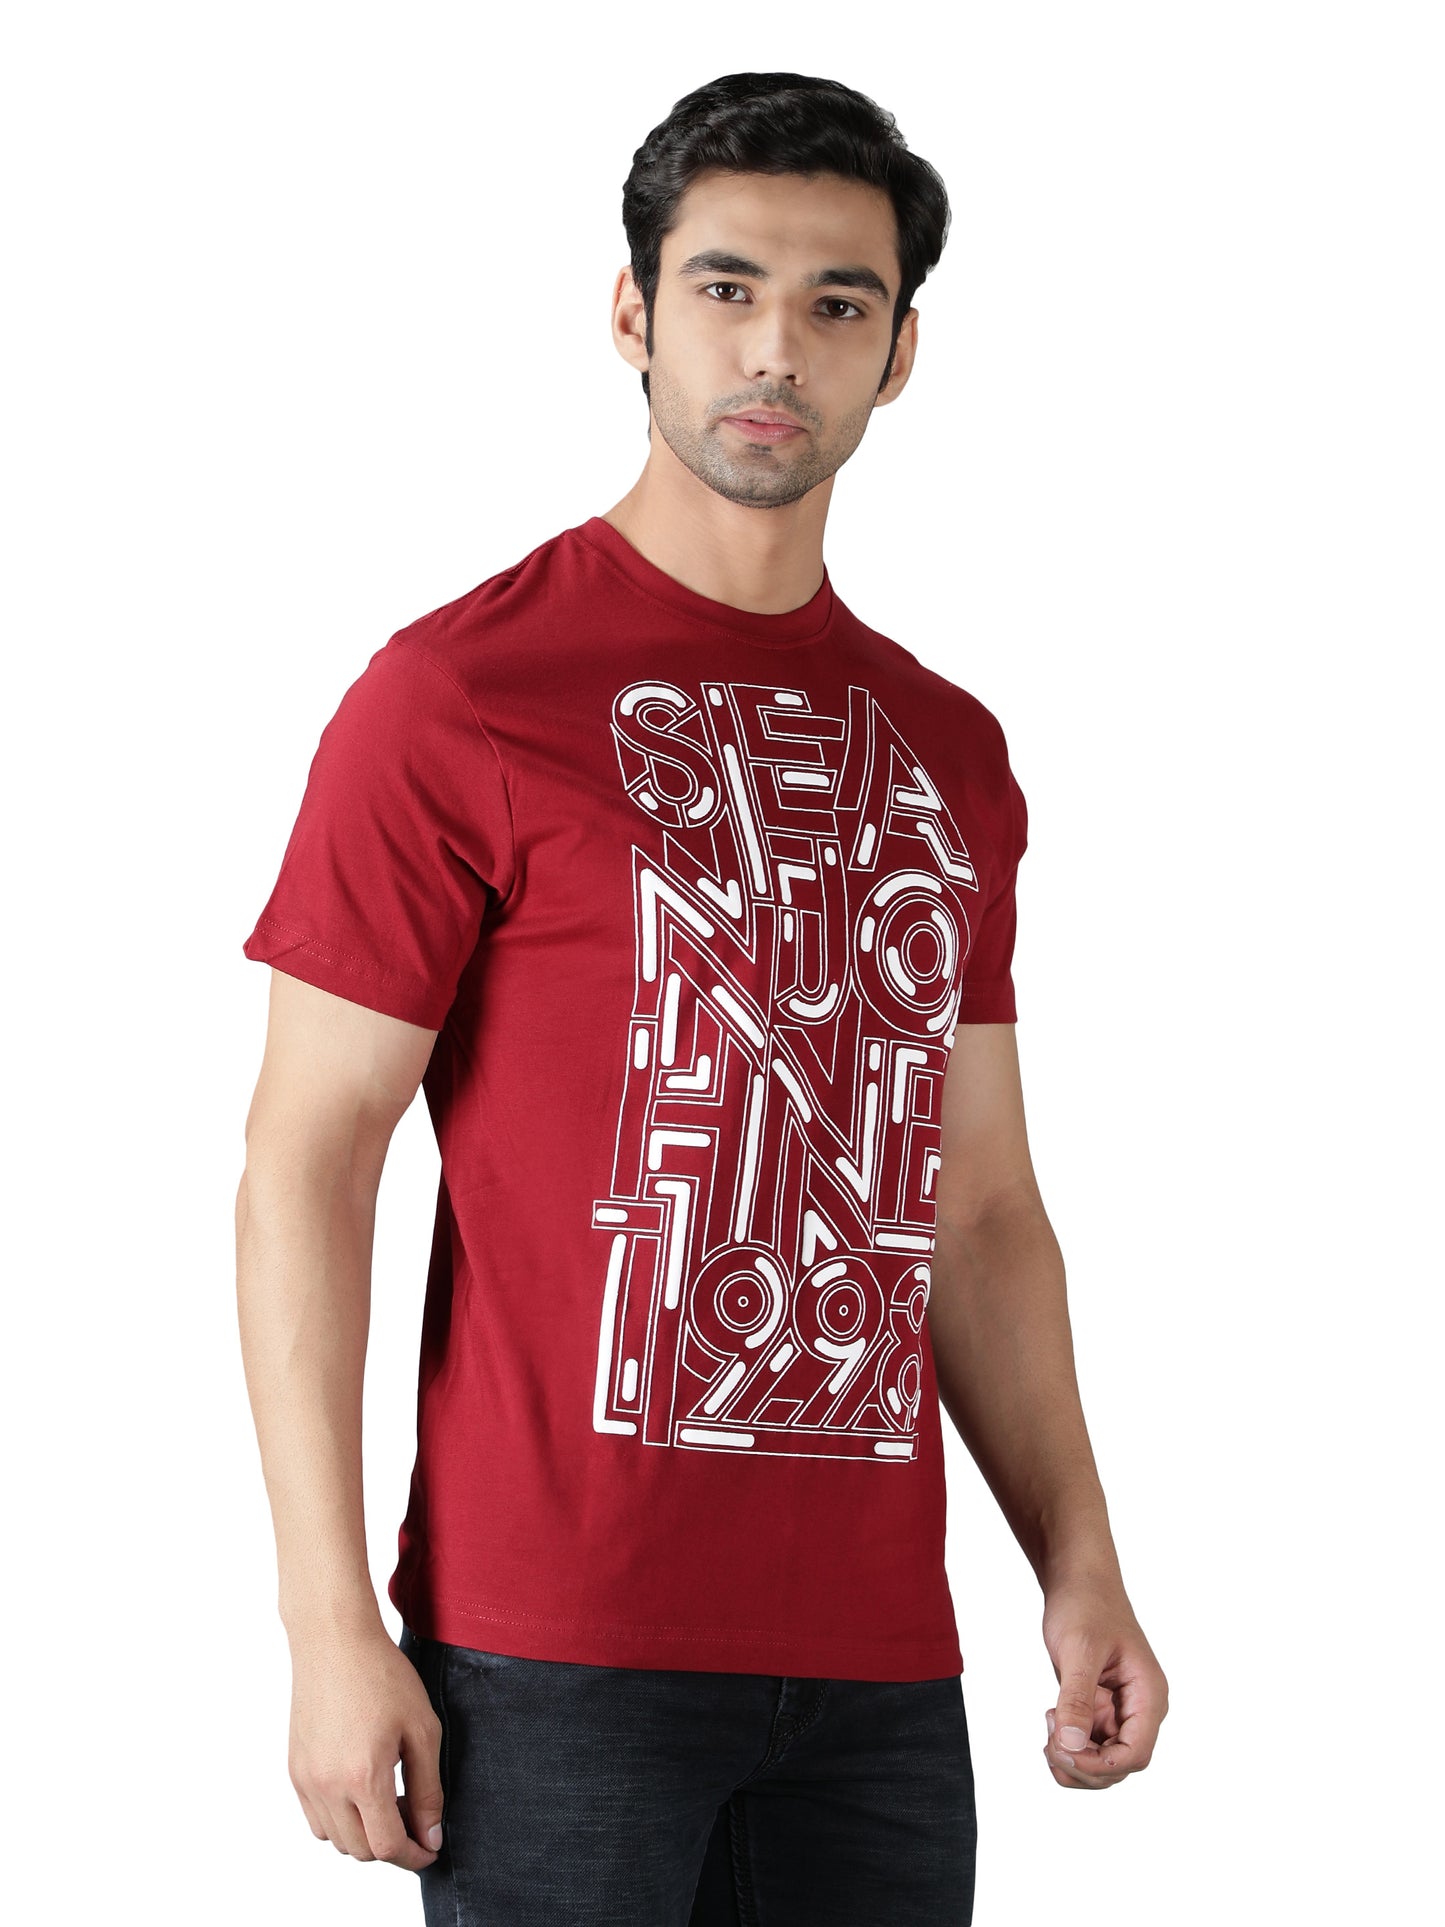 NUEVOSPORTA Men's Cotton Graphic Printed Maroon T-Shirt